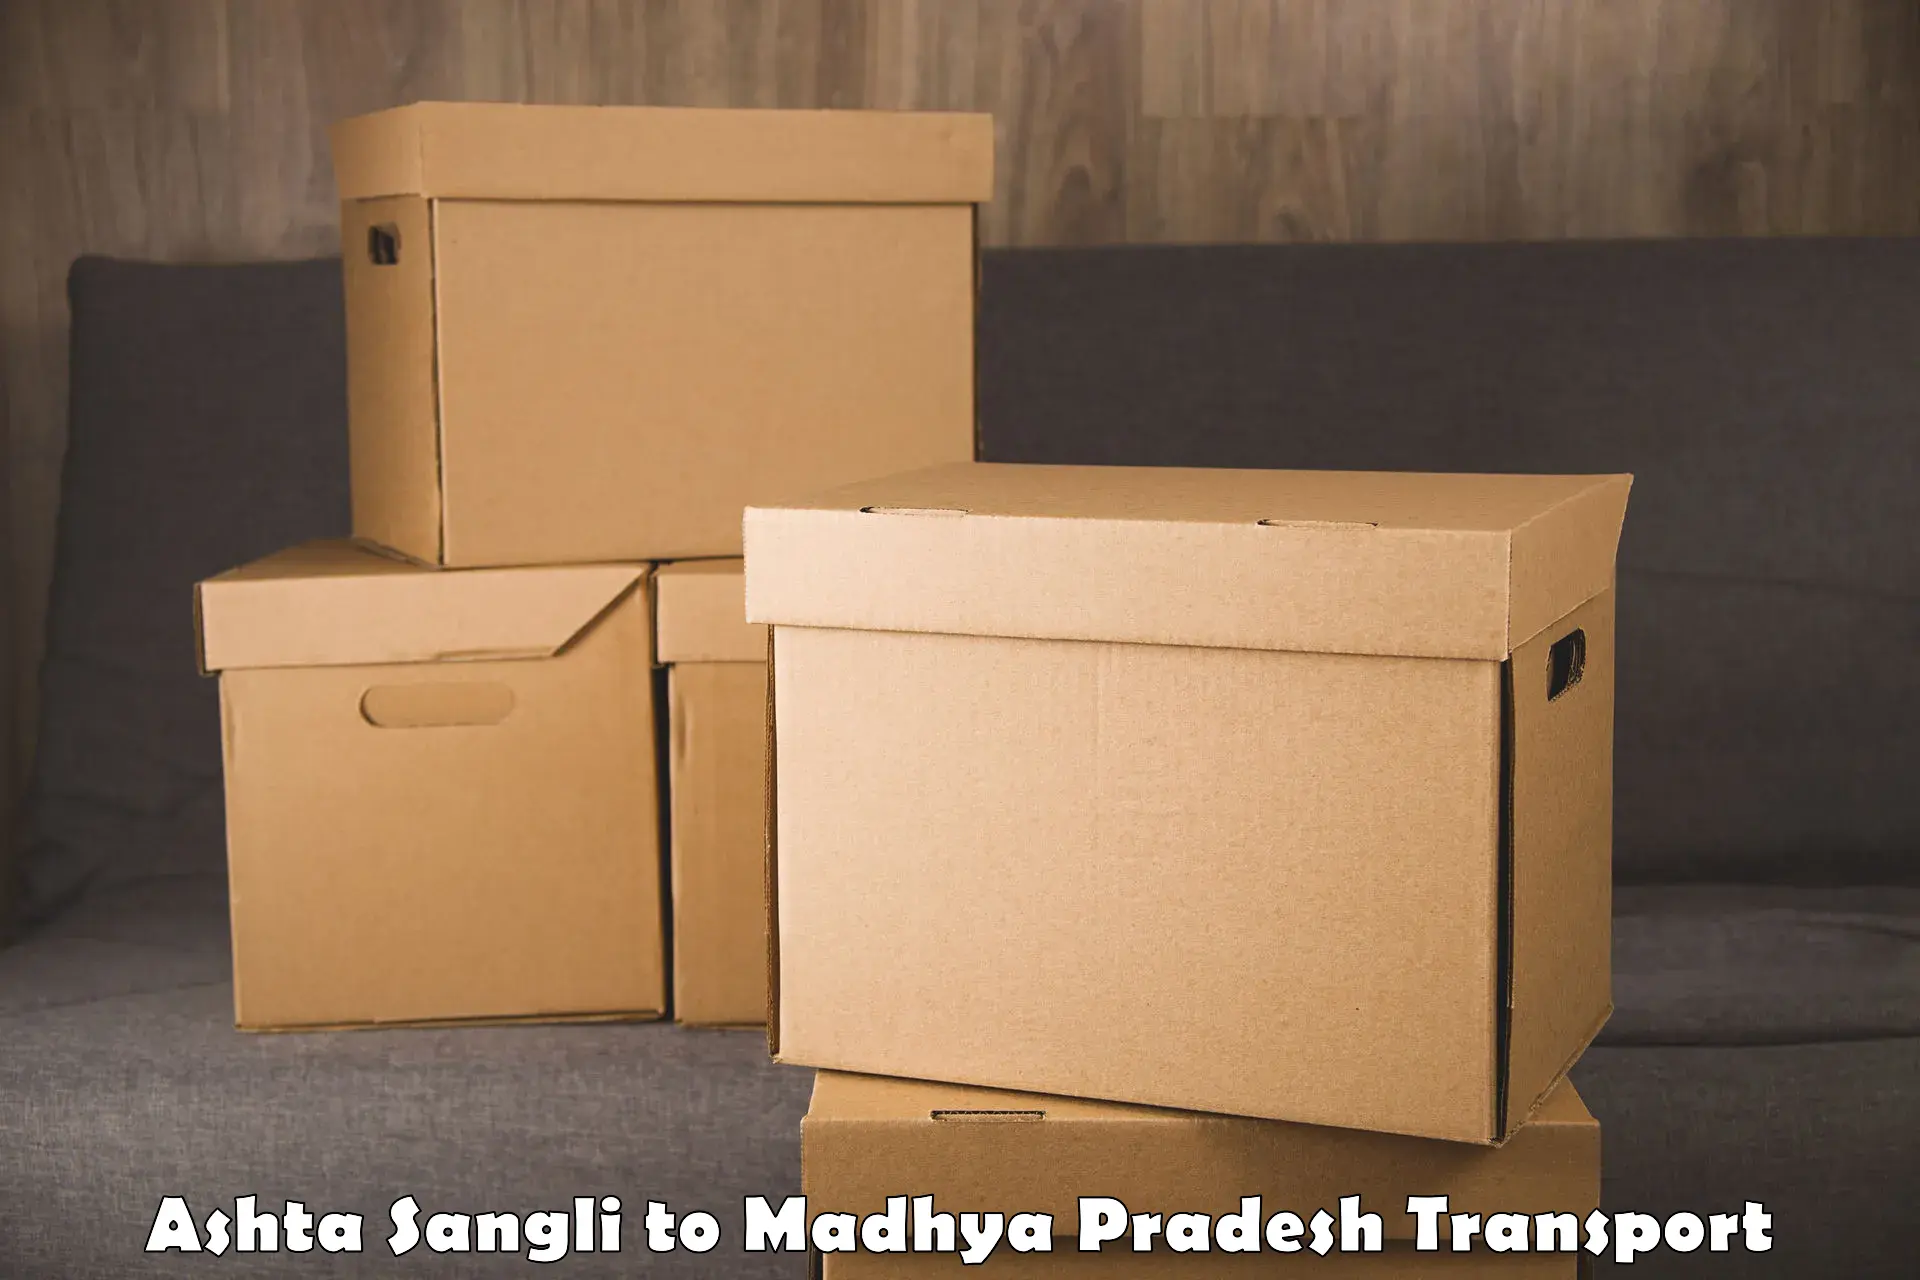 Delivery service Ashta Sangli to Nainpur